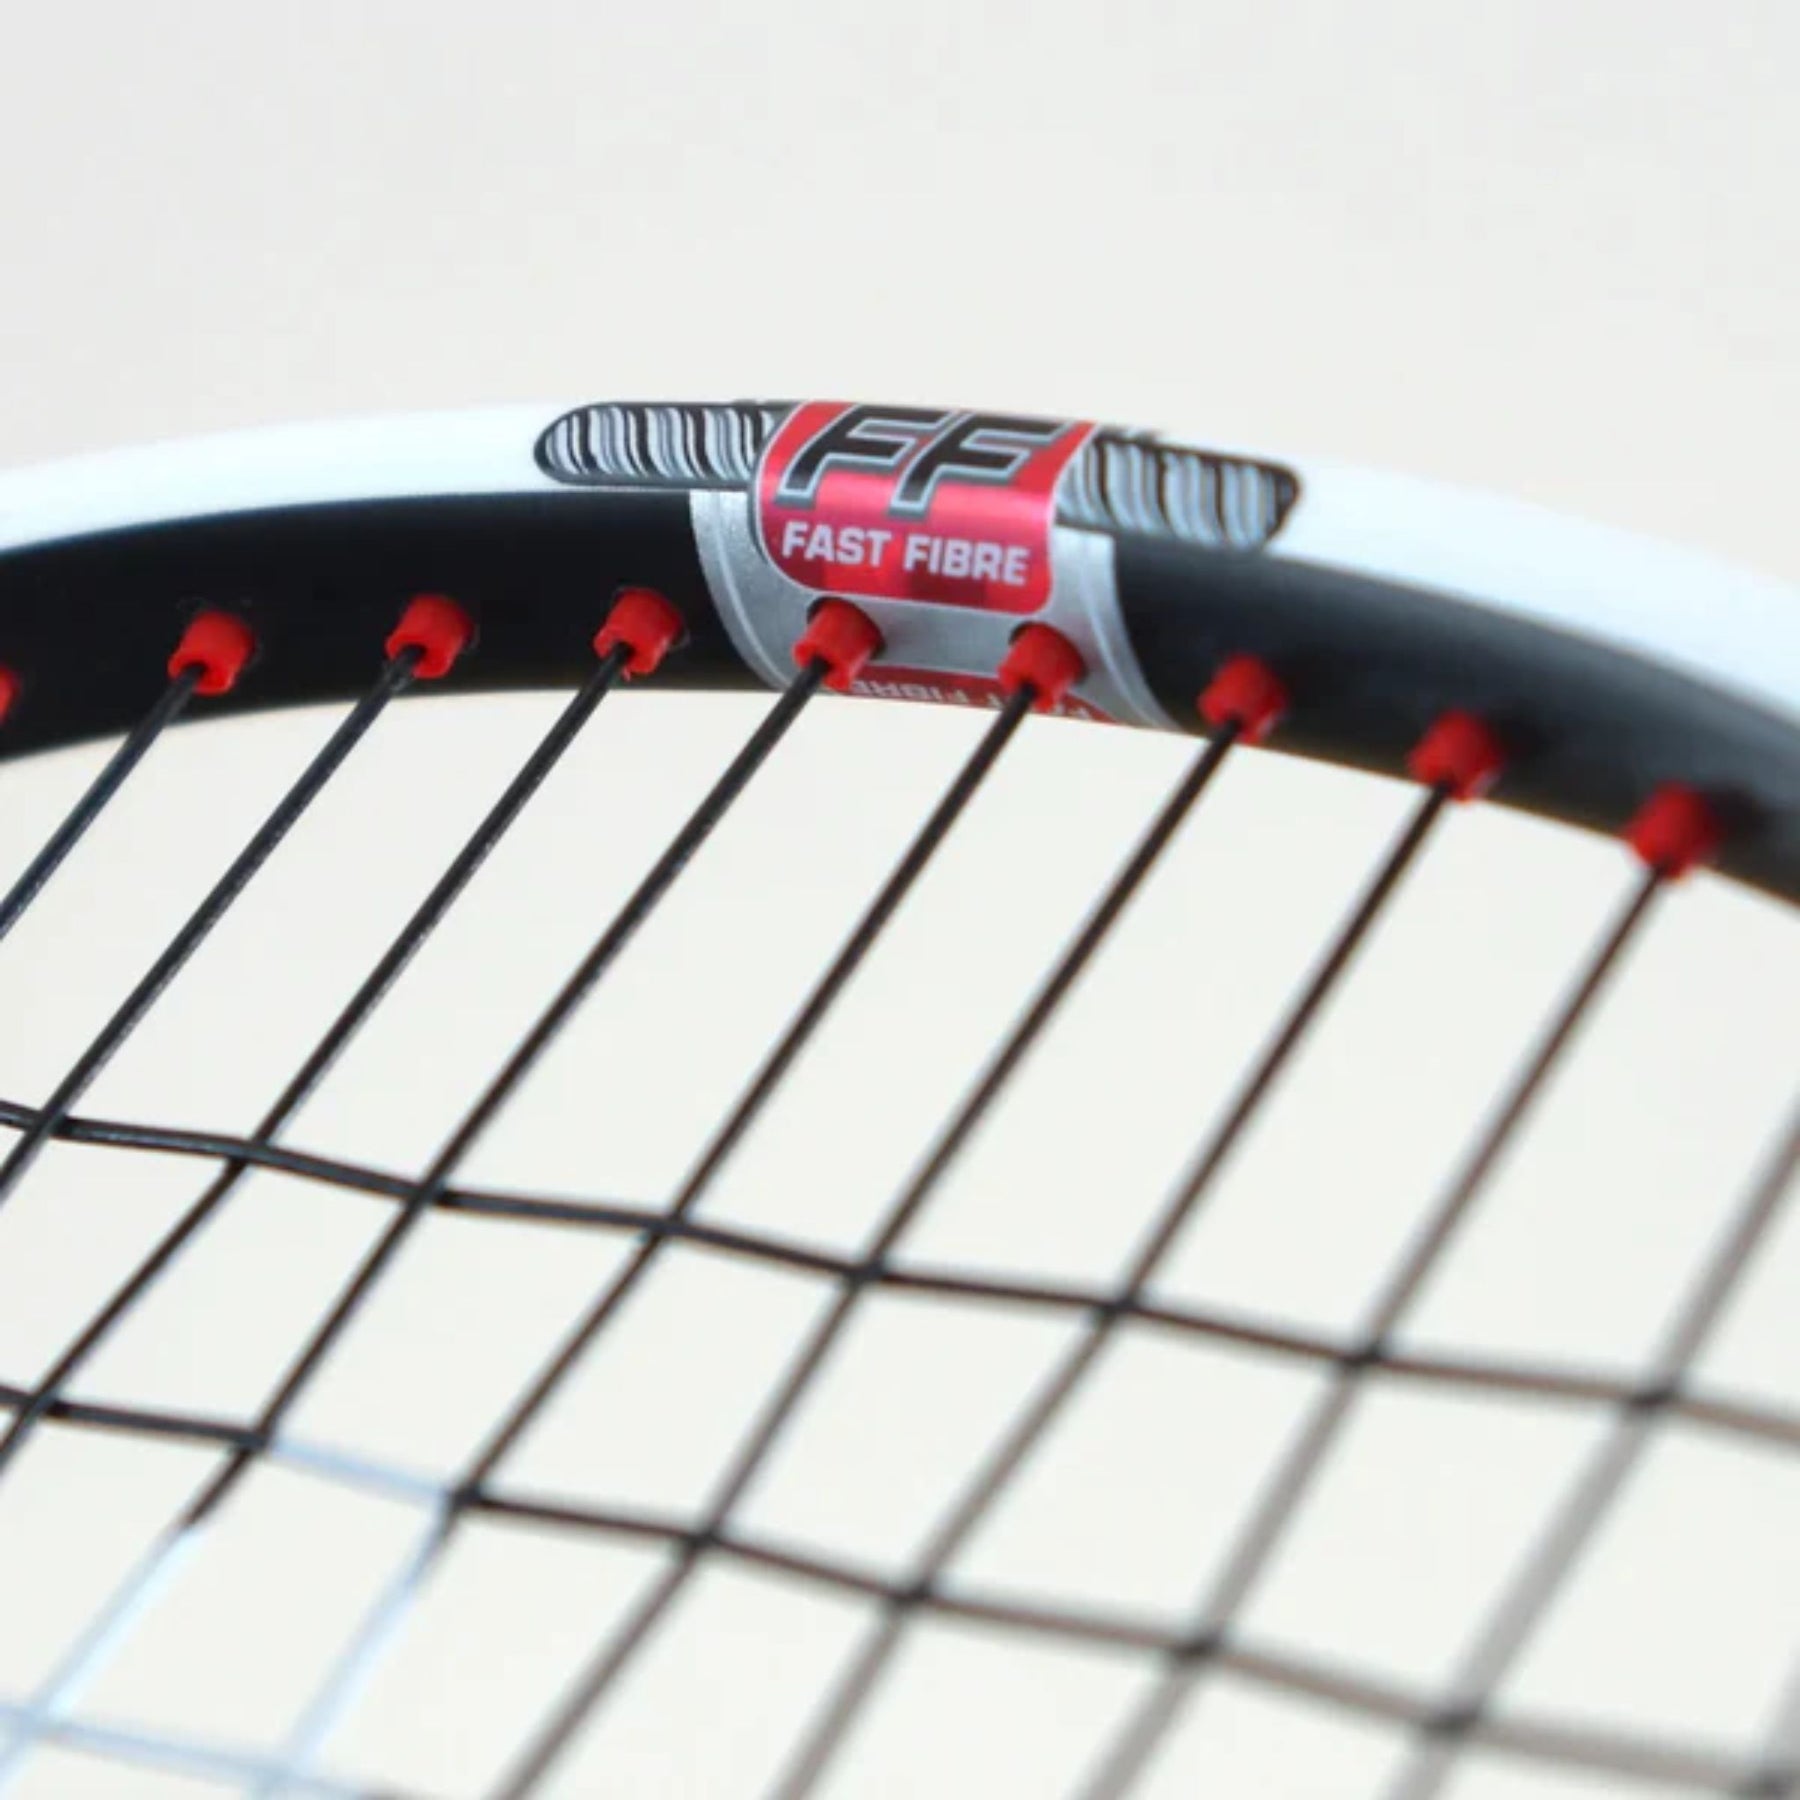 Karakal Black Zone Lite Badminton Racket